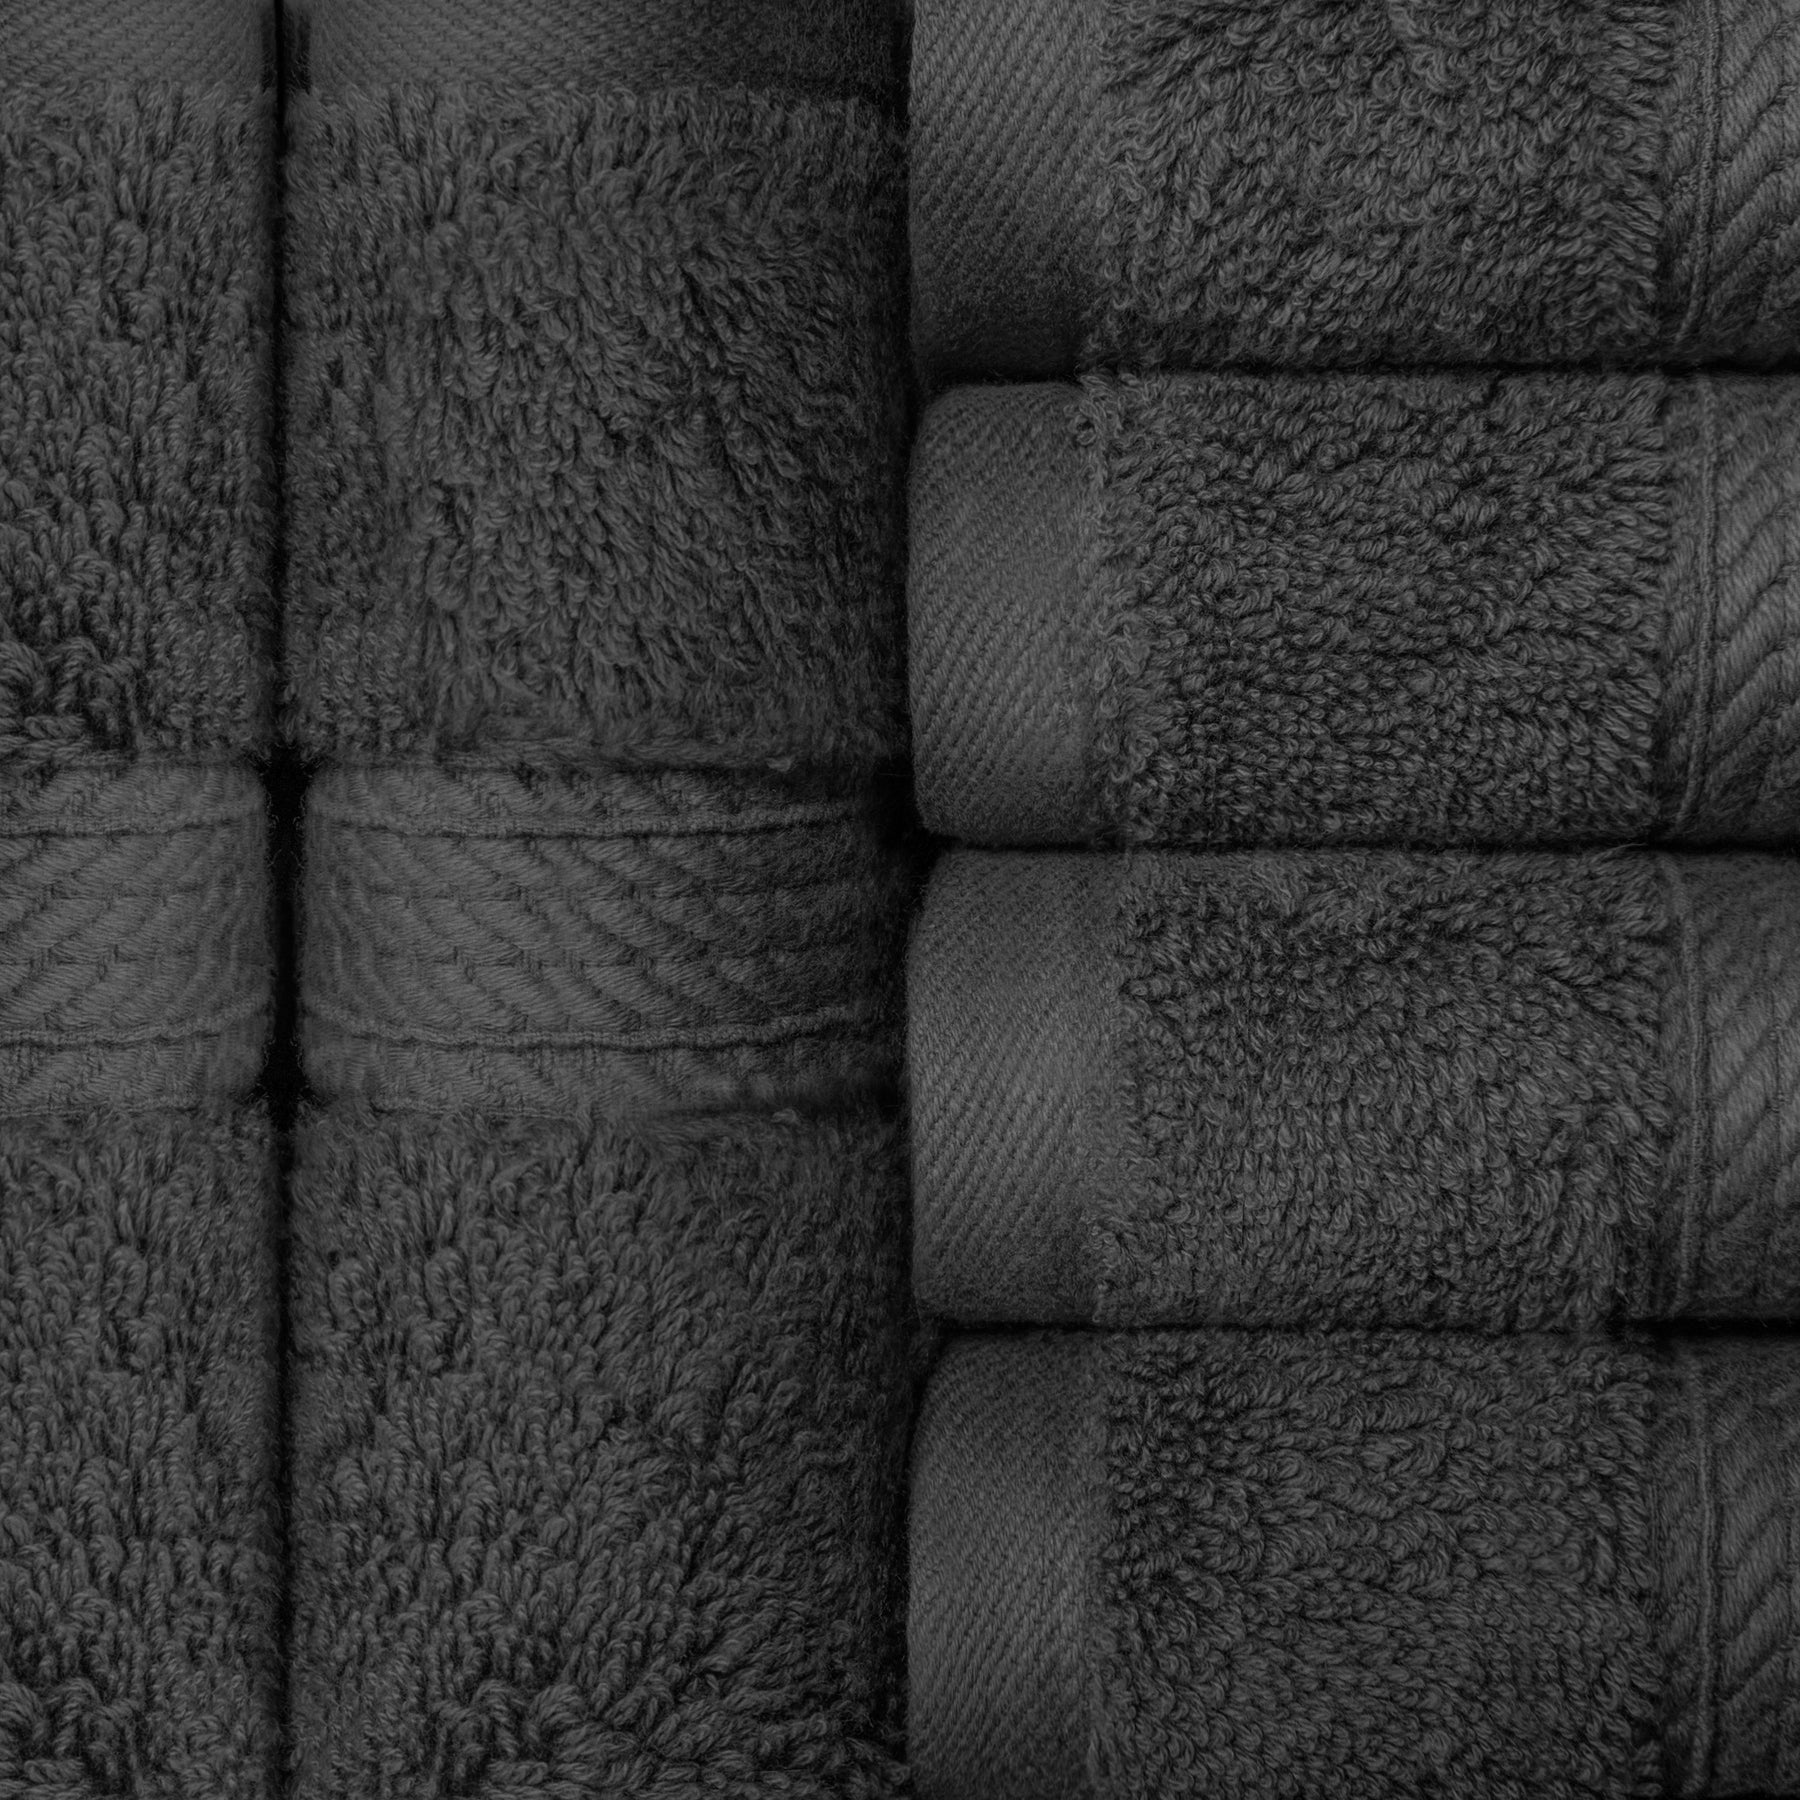 Egyptian Cotton Heavyweight 6 Piece Face Towel/ Washcloth Set - Charcoal